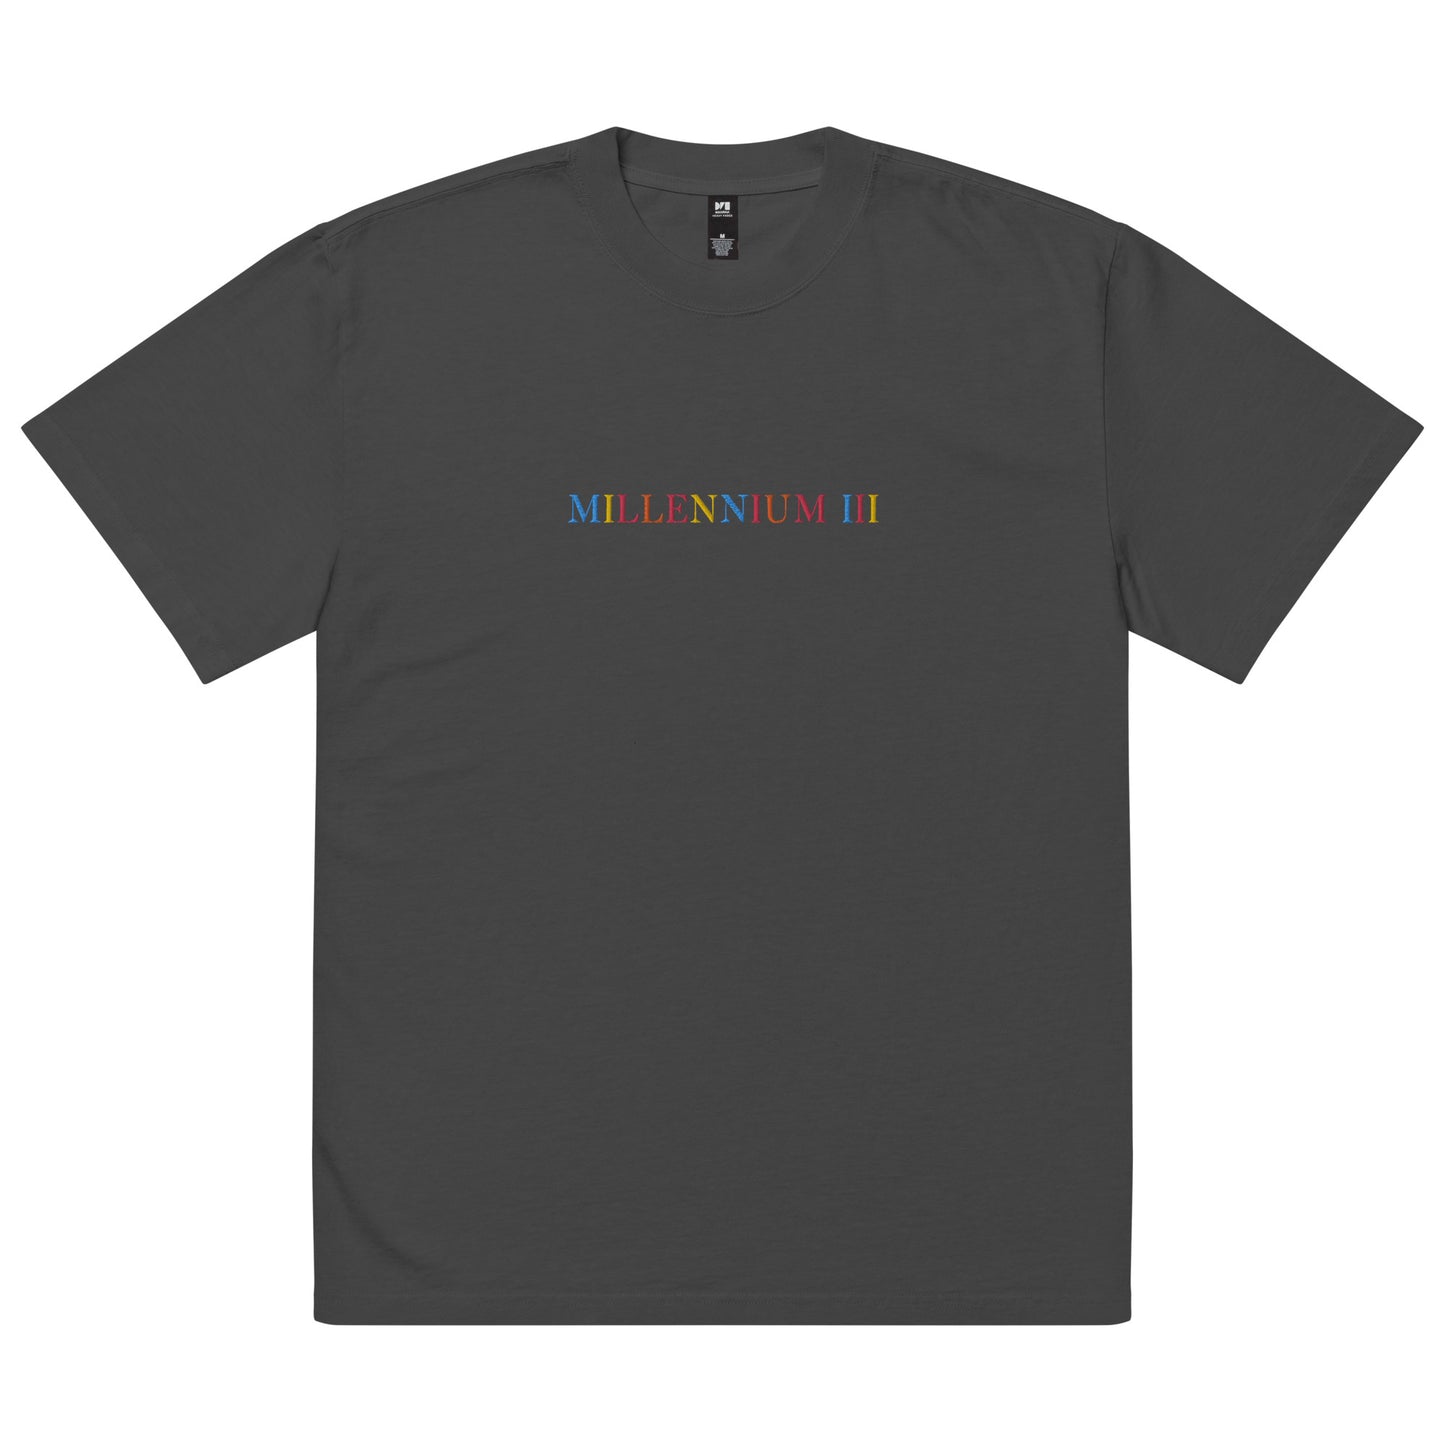 MILLENNIUM III Faded T-Shirt